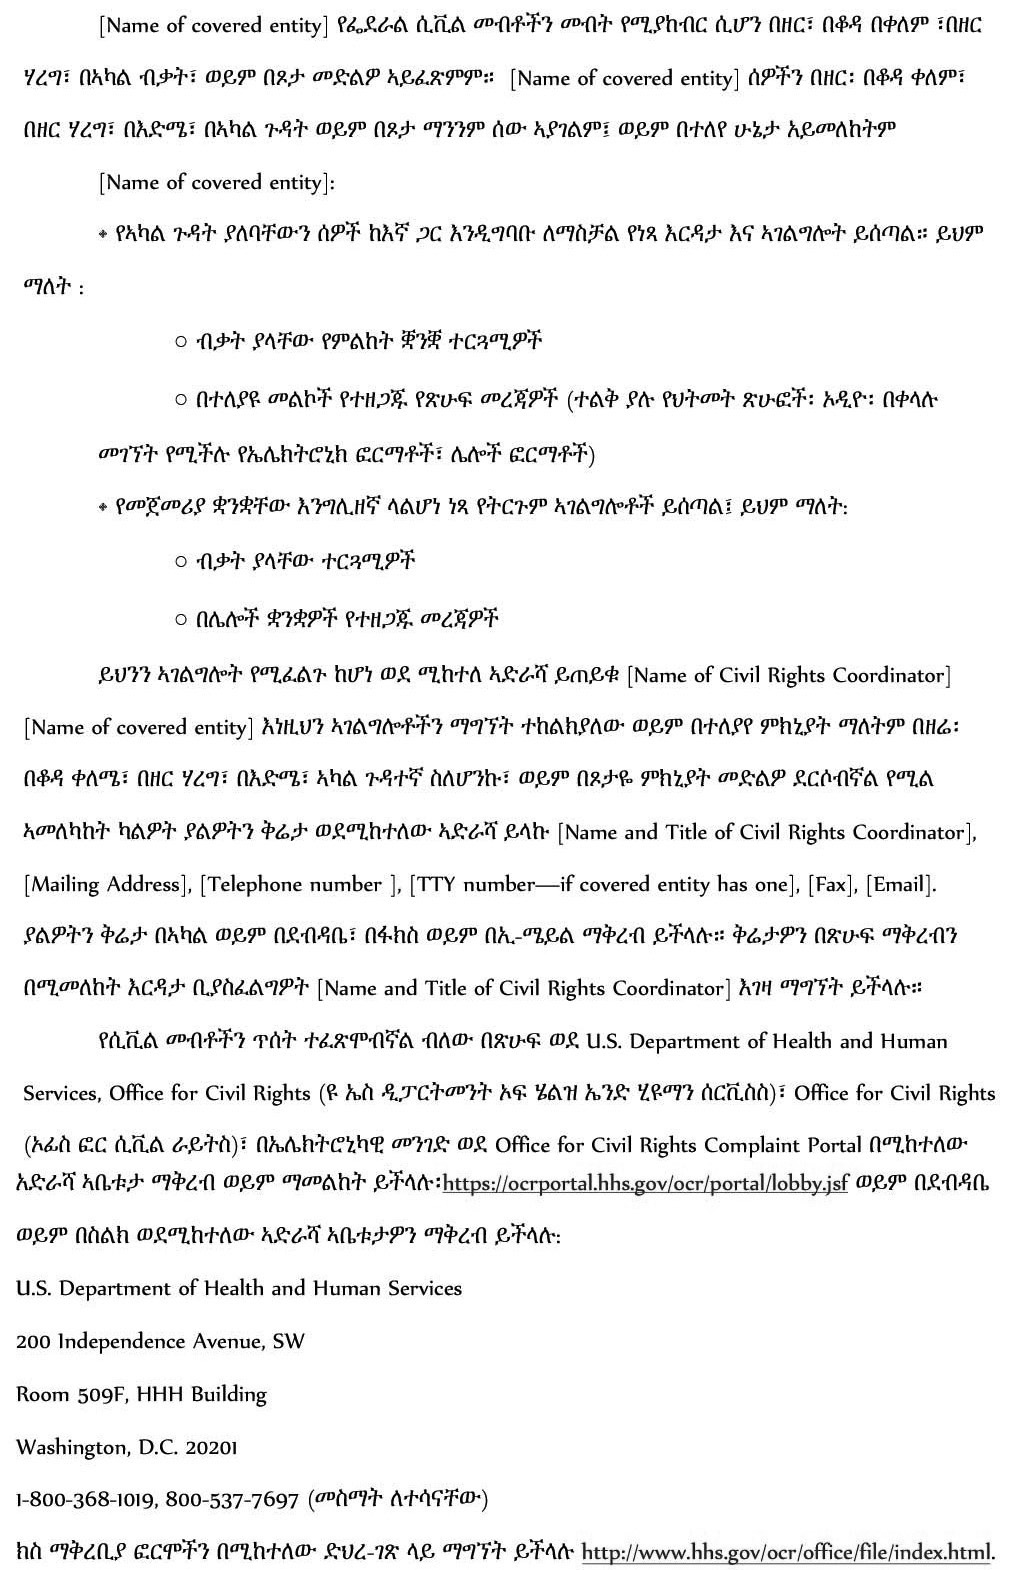 sample ce notice amharic